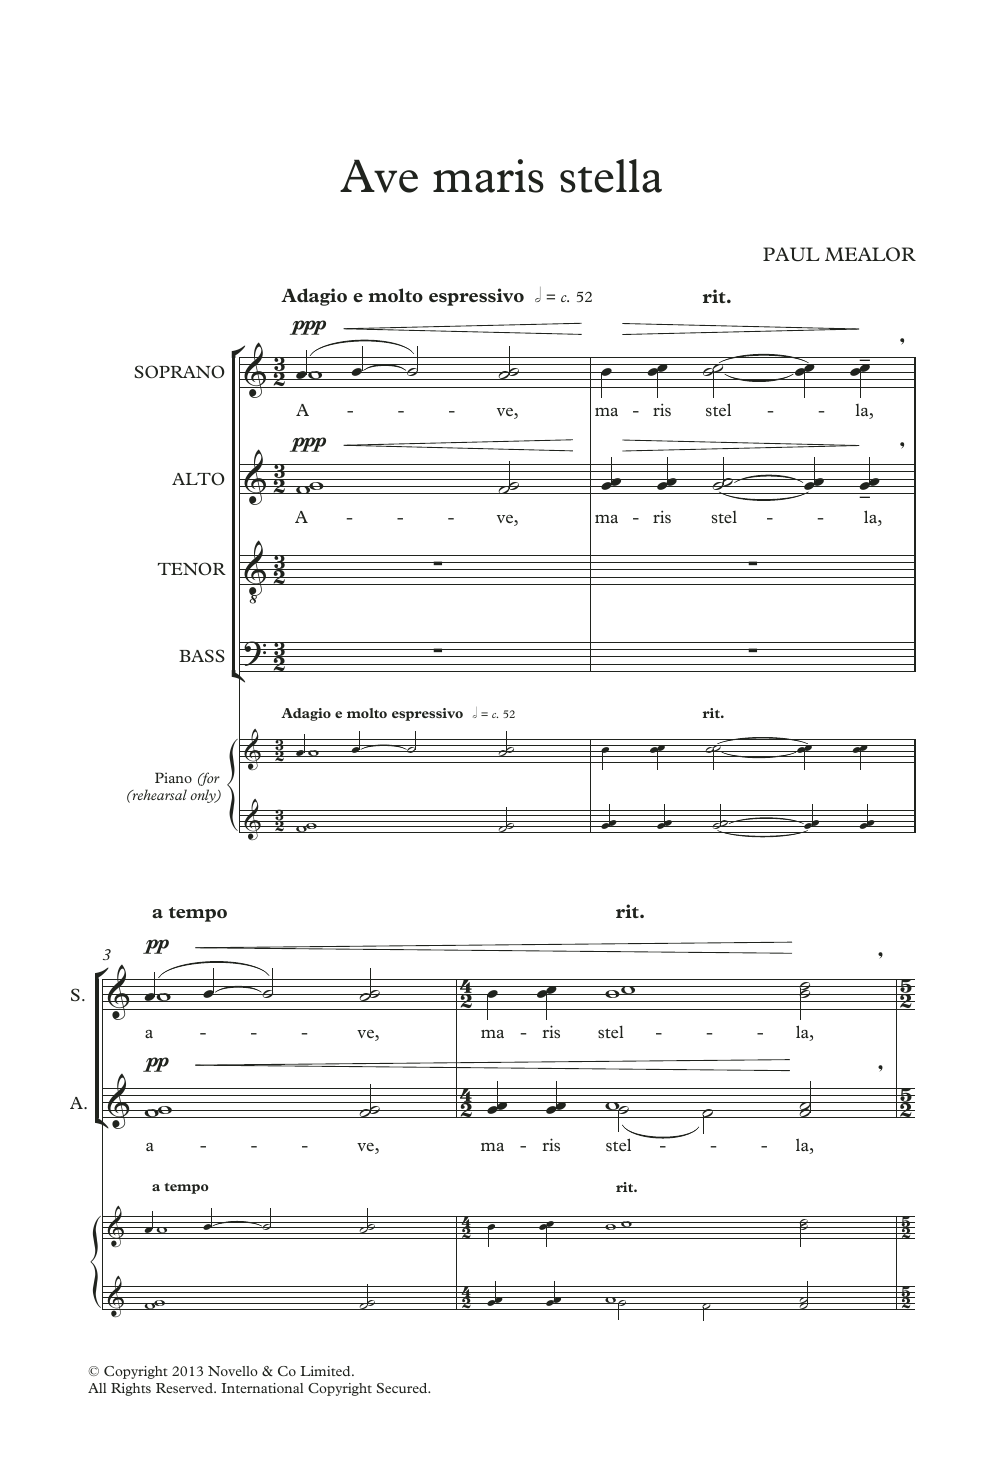 Paul Mealor Ave Maris Stella Sheet Music Notes & Chords for SATB Choir - Download or Print PDF